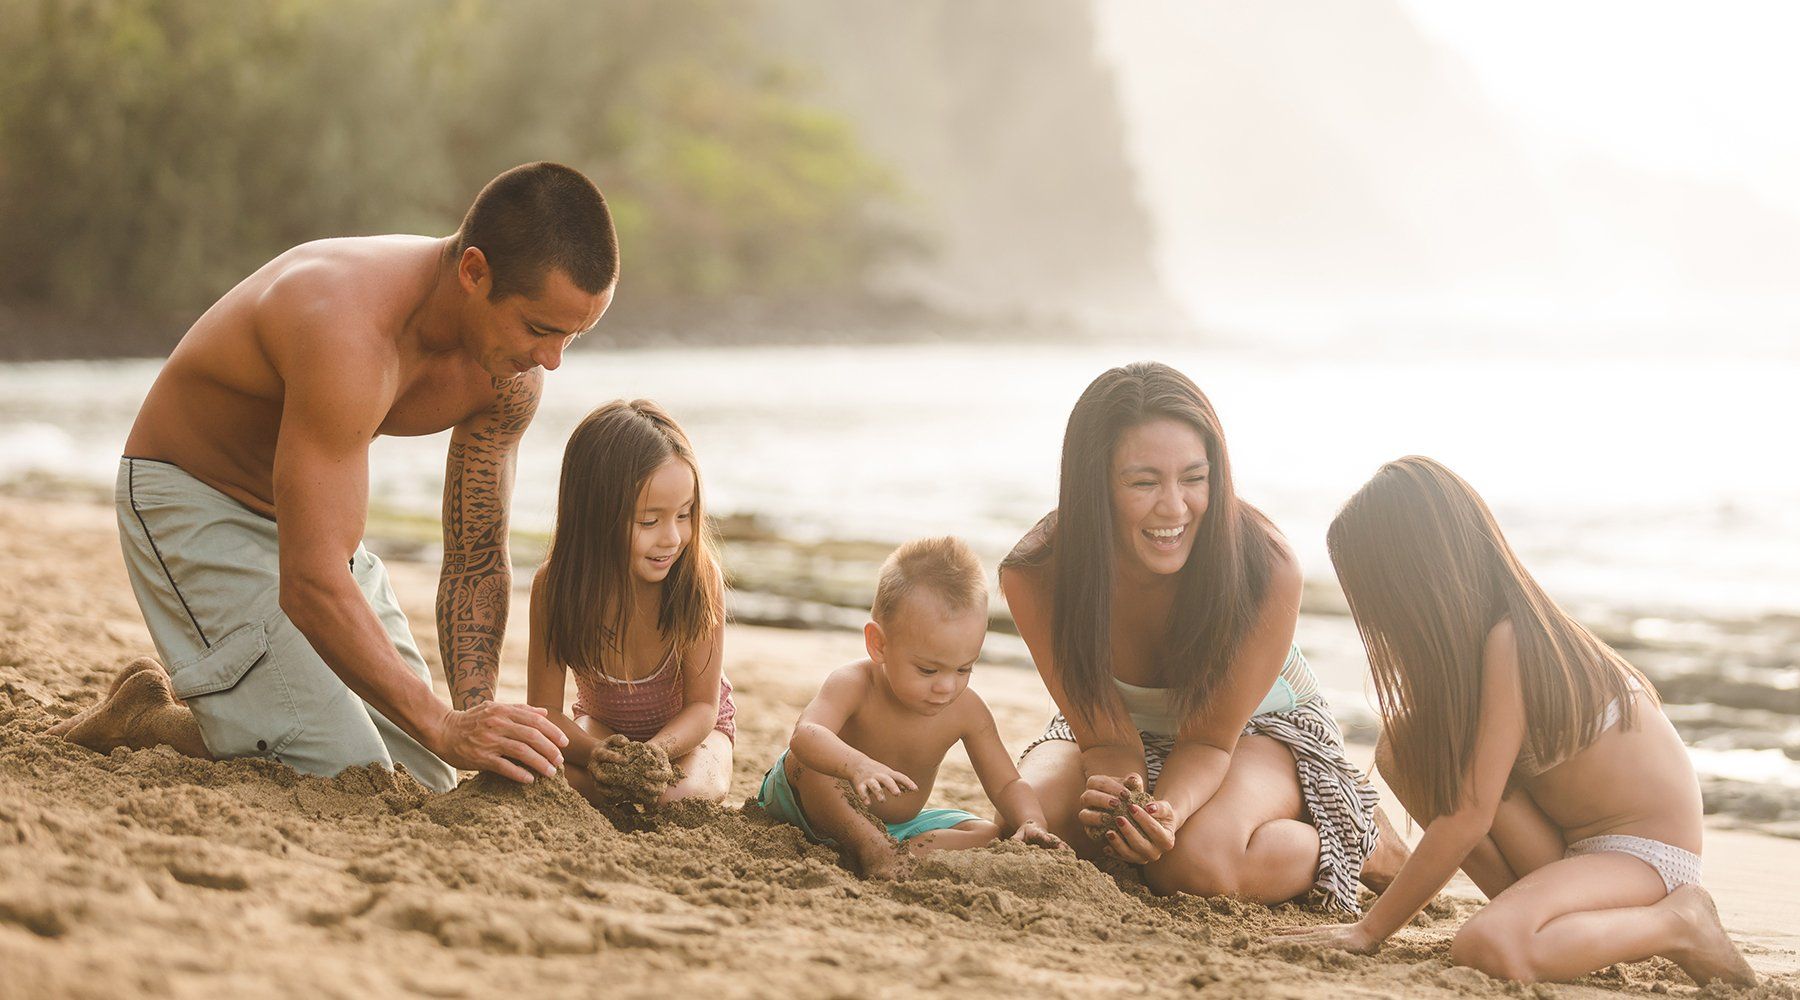 A Hawaii family plays on a sandy beach together